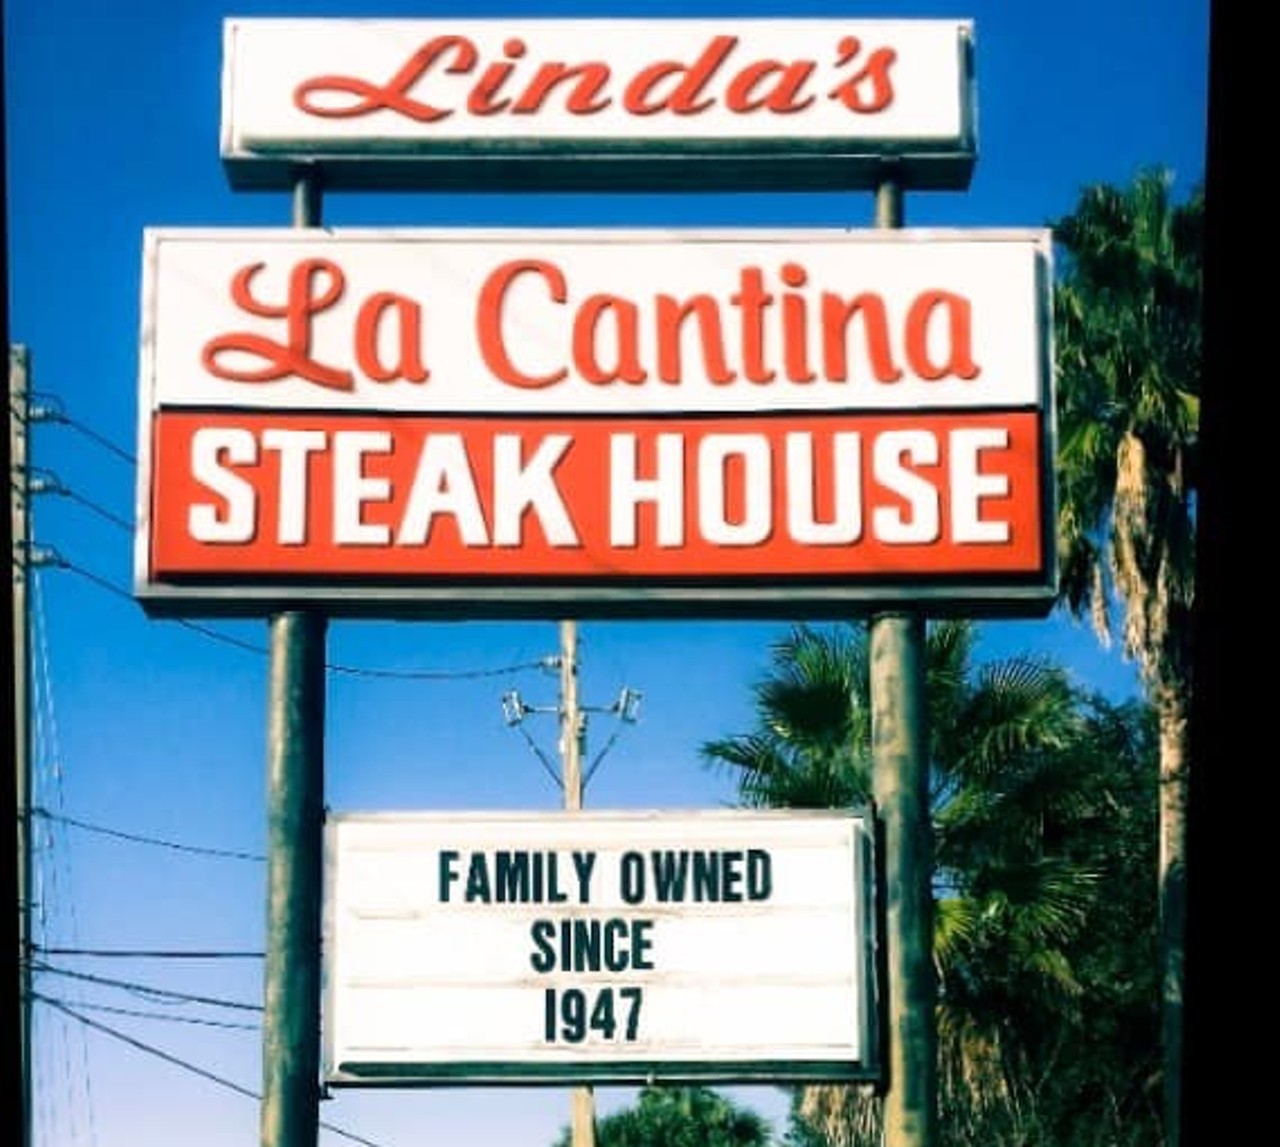 Best Steakhouse
Winner: Linda’s La Cantina
Runners-up: Christner’s Prime Steak and Lobster, Kres Chophouse